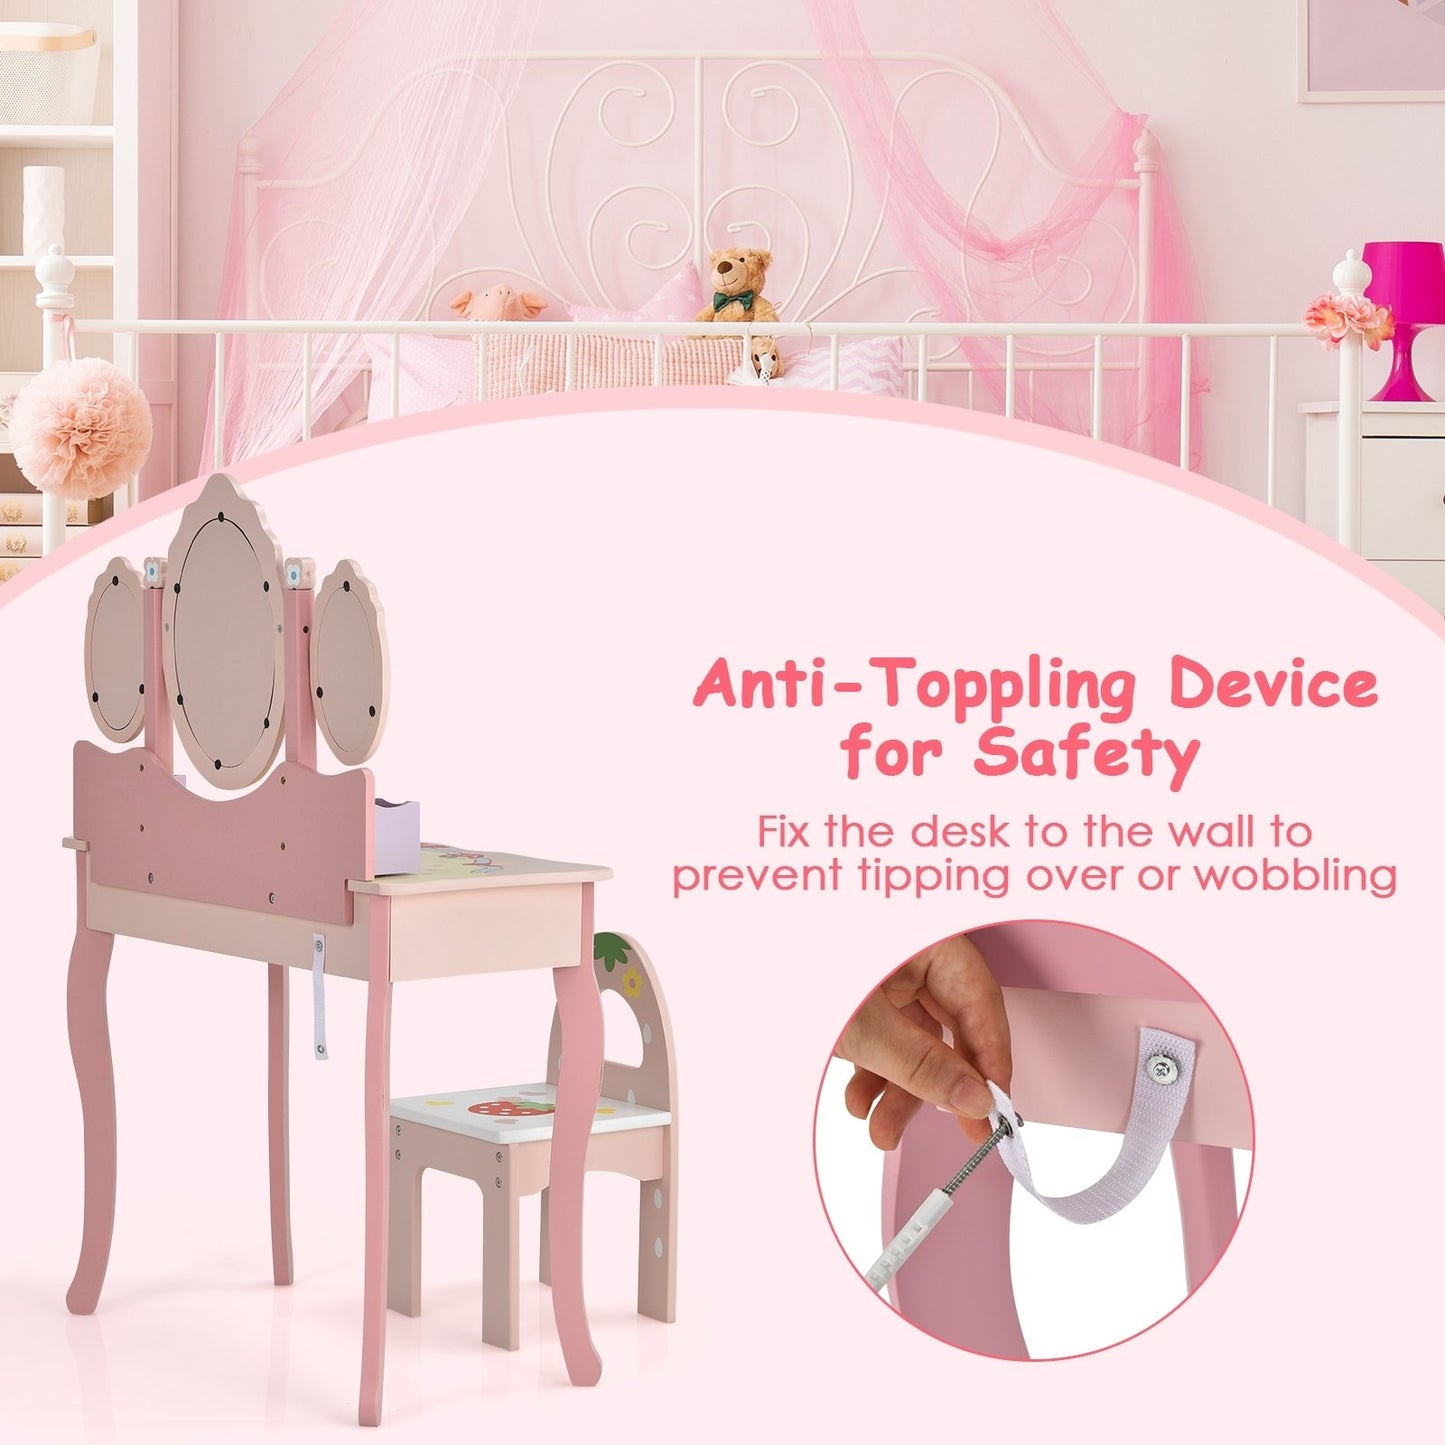 Kids Vanity Princess Makeup Dressing Table Chair Set with Tri-fold Mirror, Pink